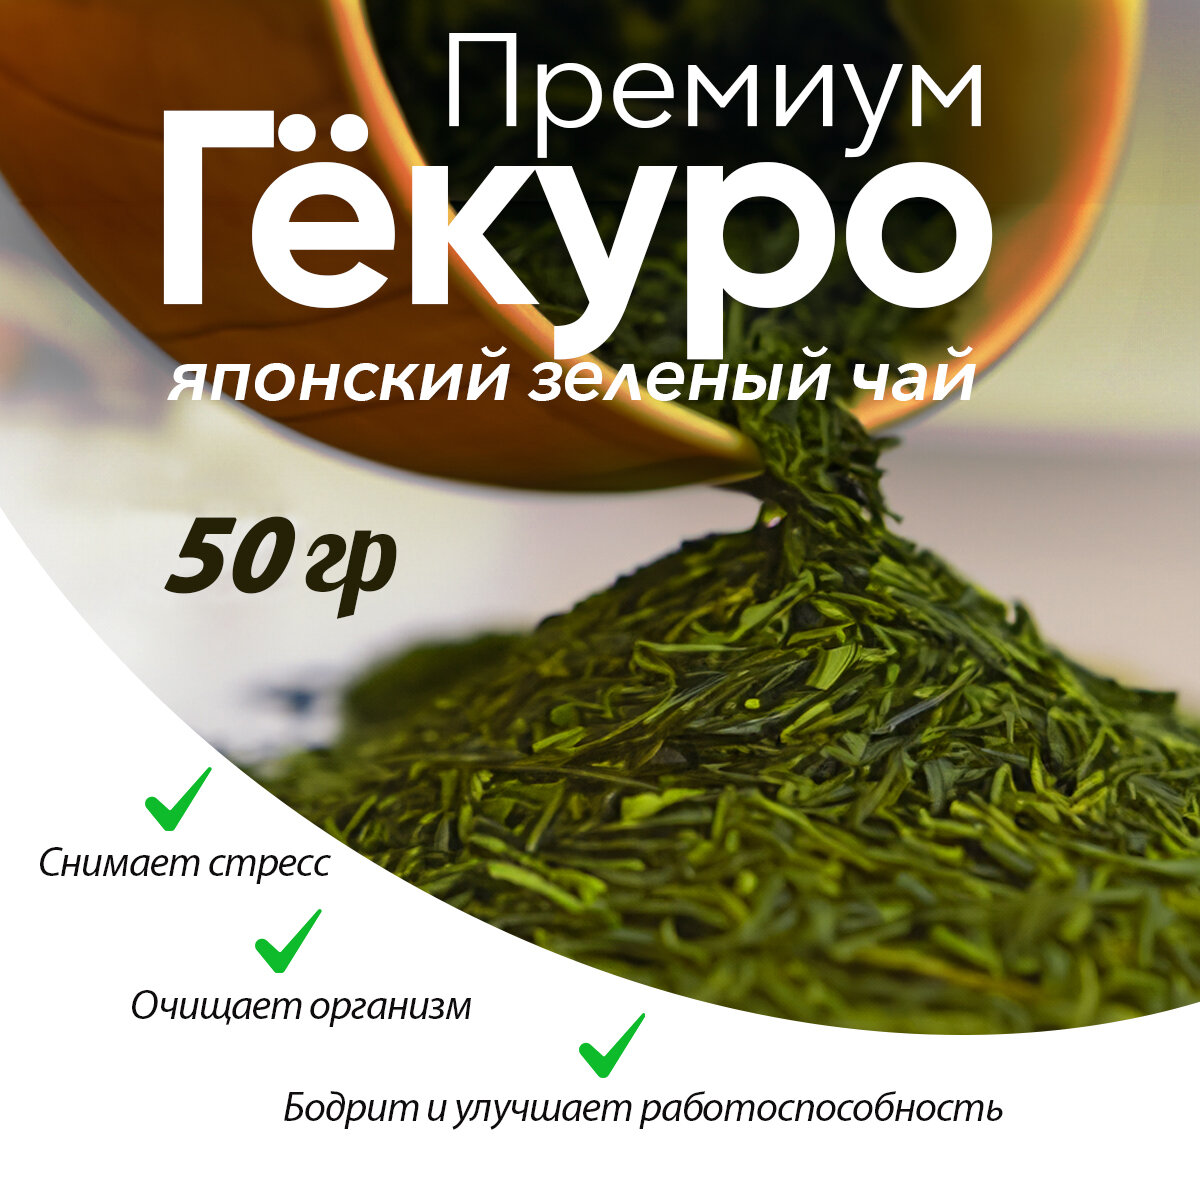 Японский зелёный чай гёкуро премиум, 50 гр